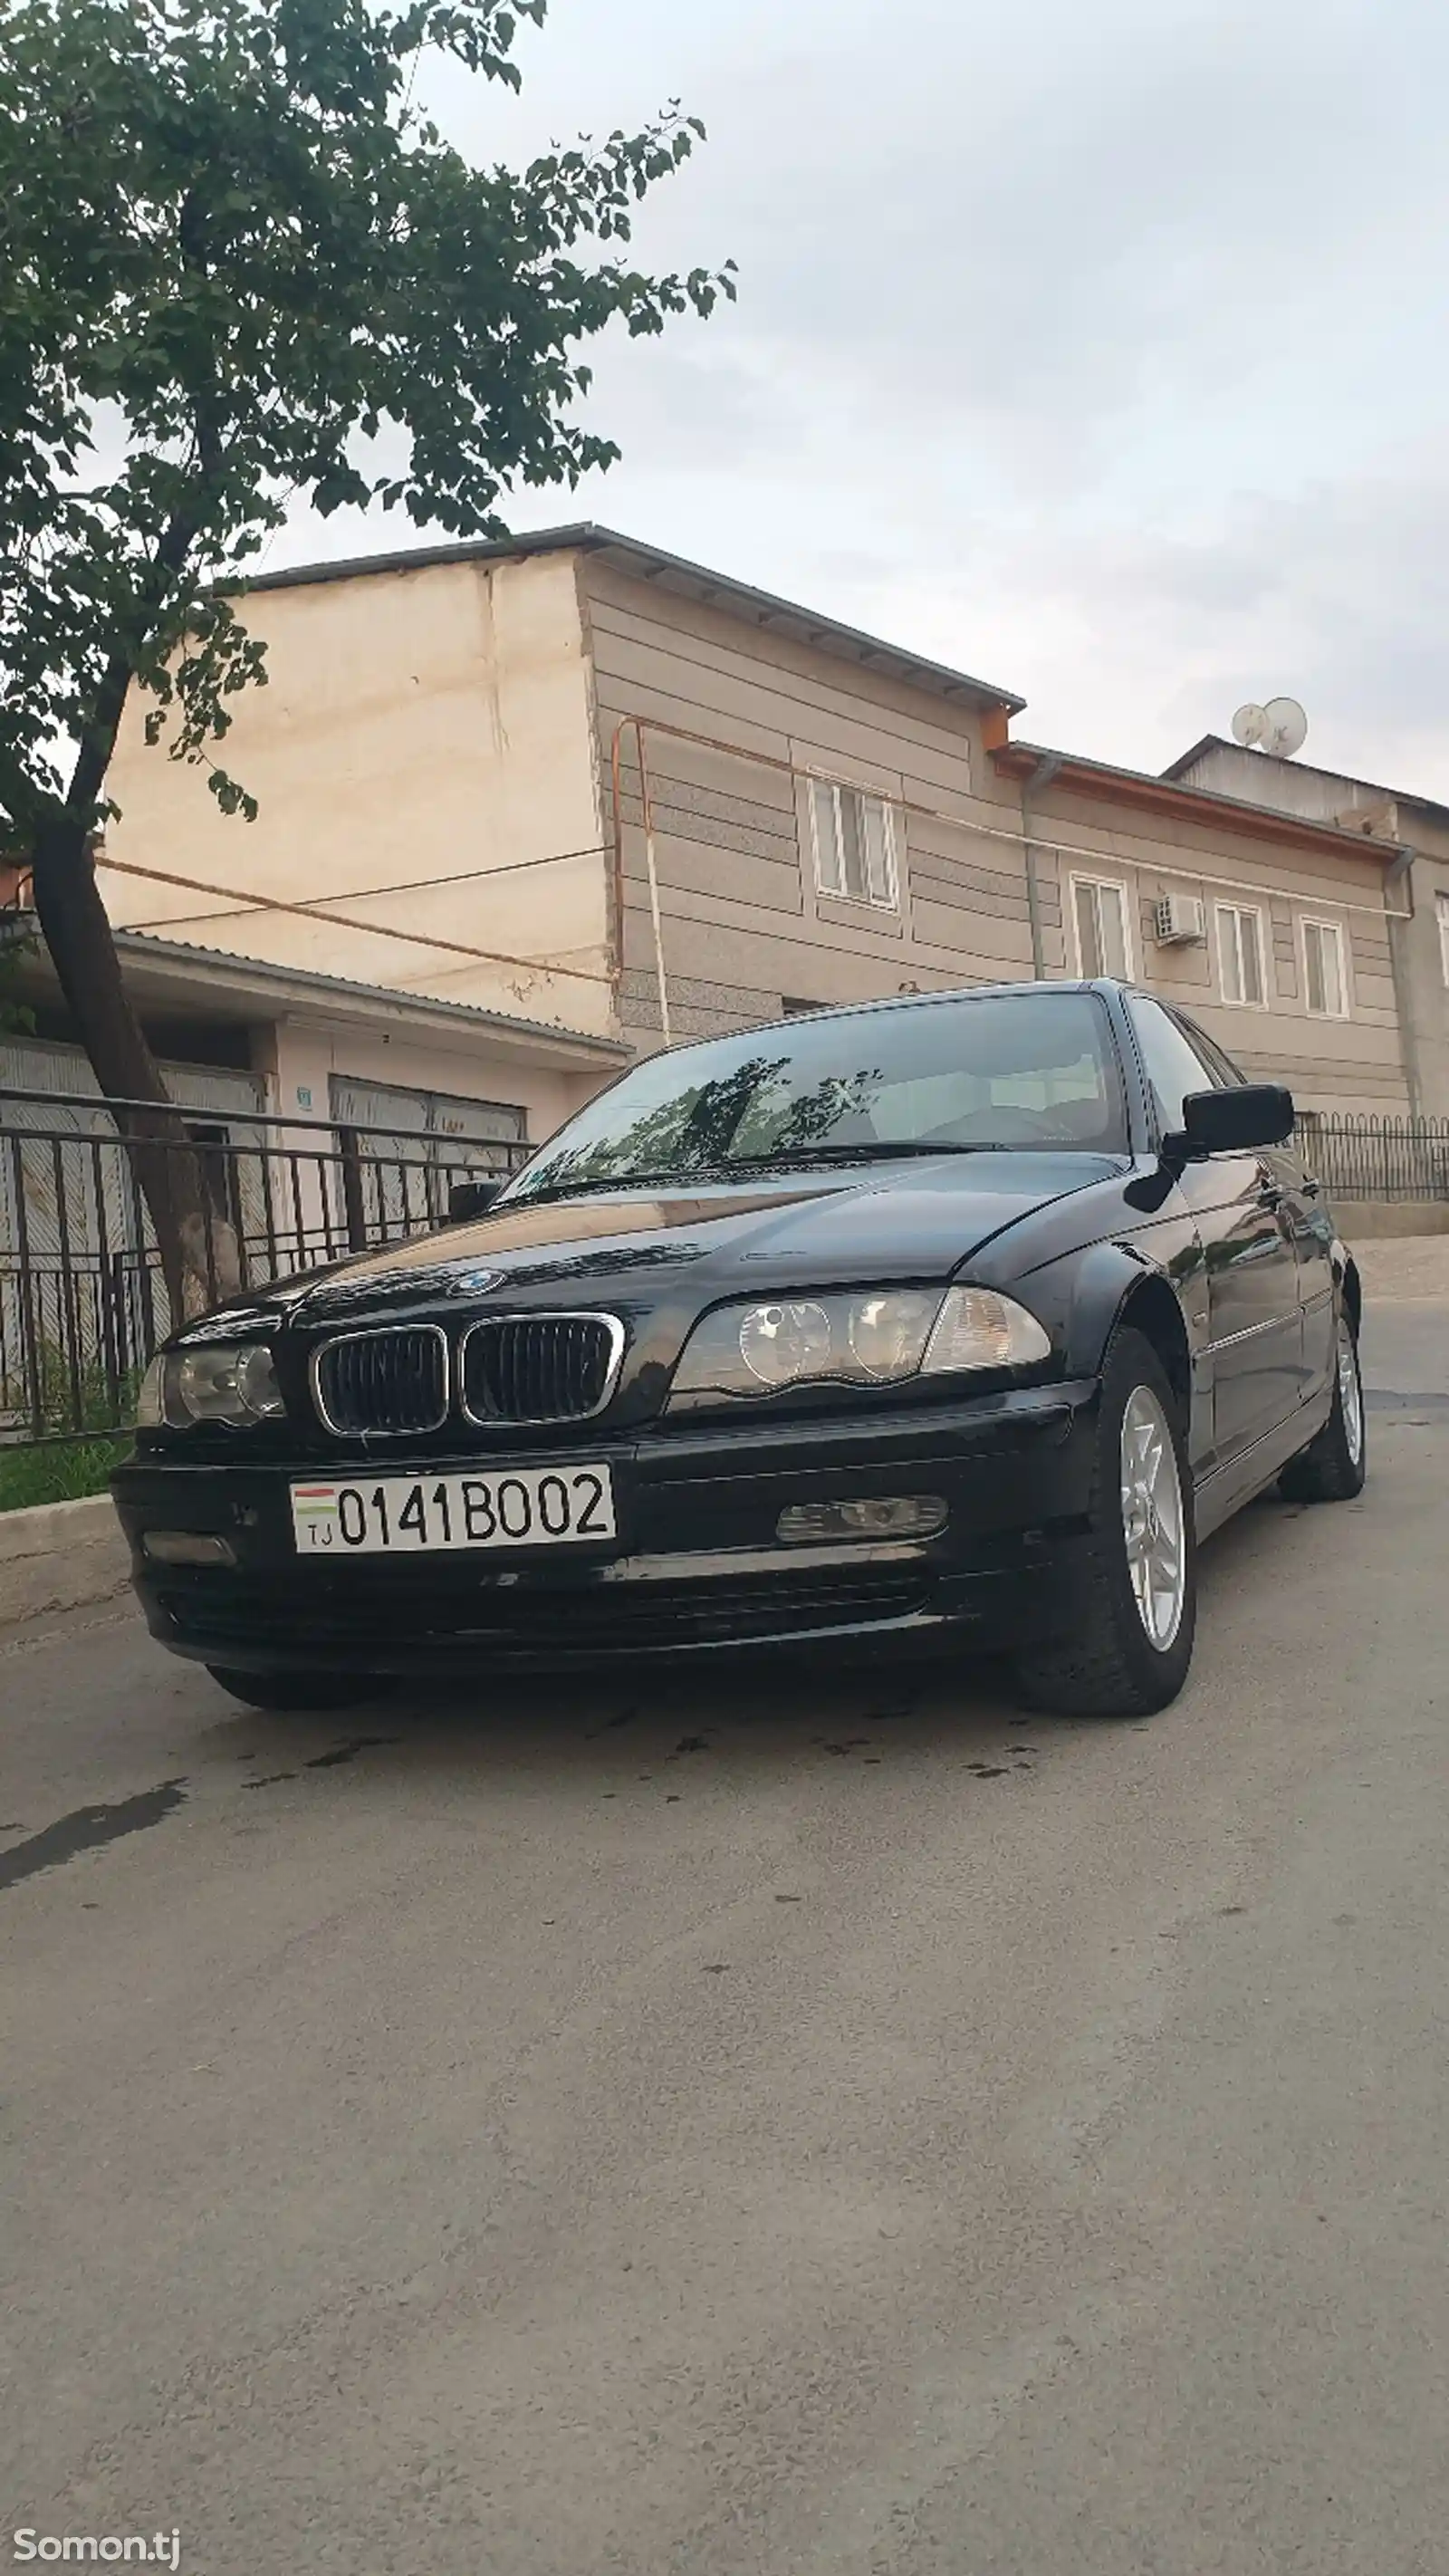 BMW 3 series, 2001-1